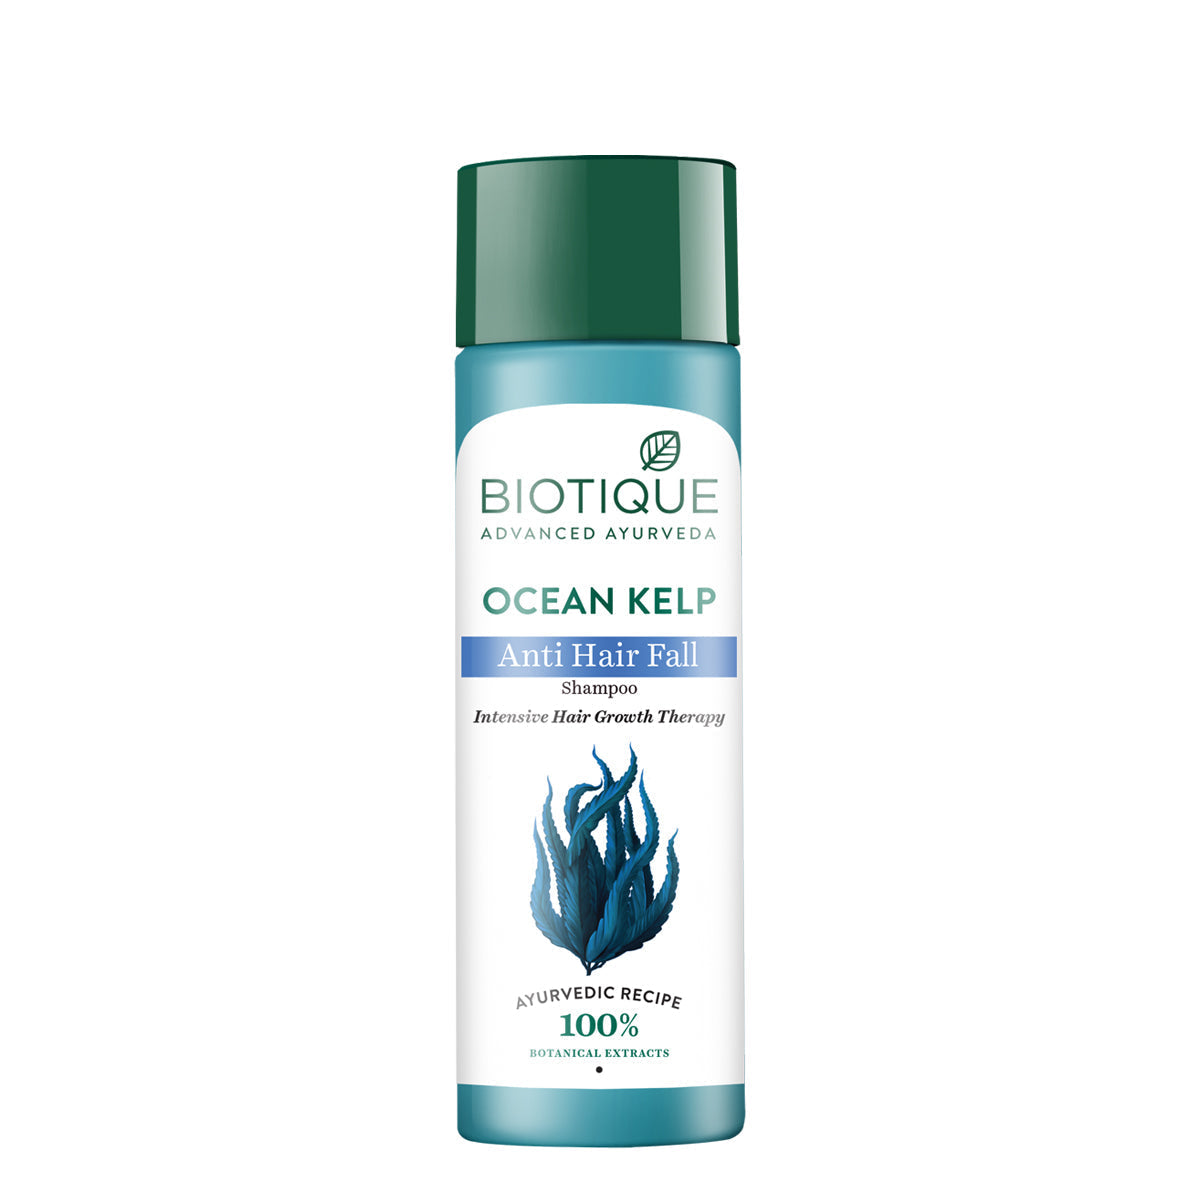 OCEAN KELP Anti Hair Fall Shampoo 650ml